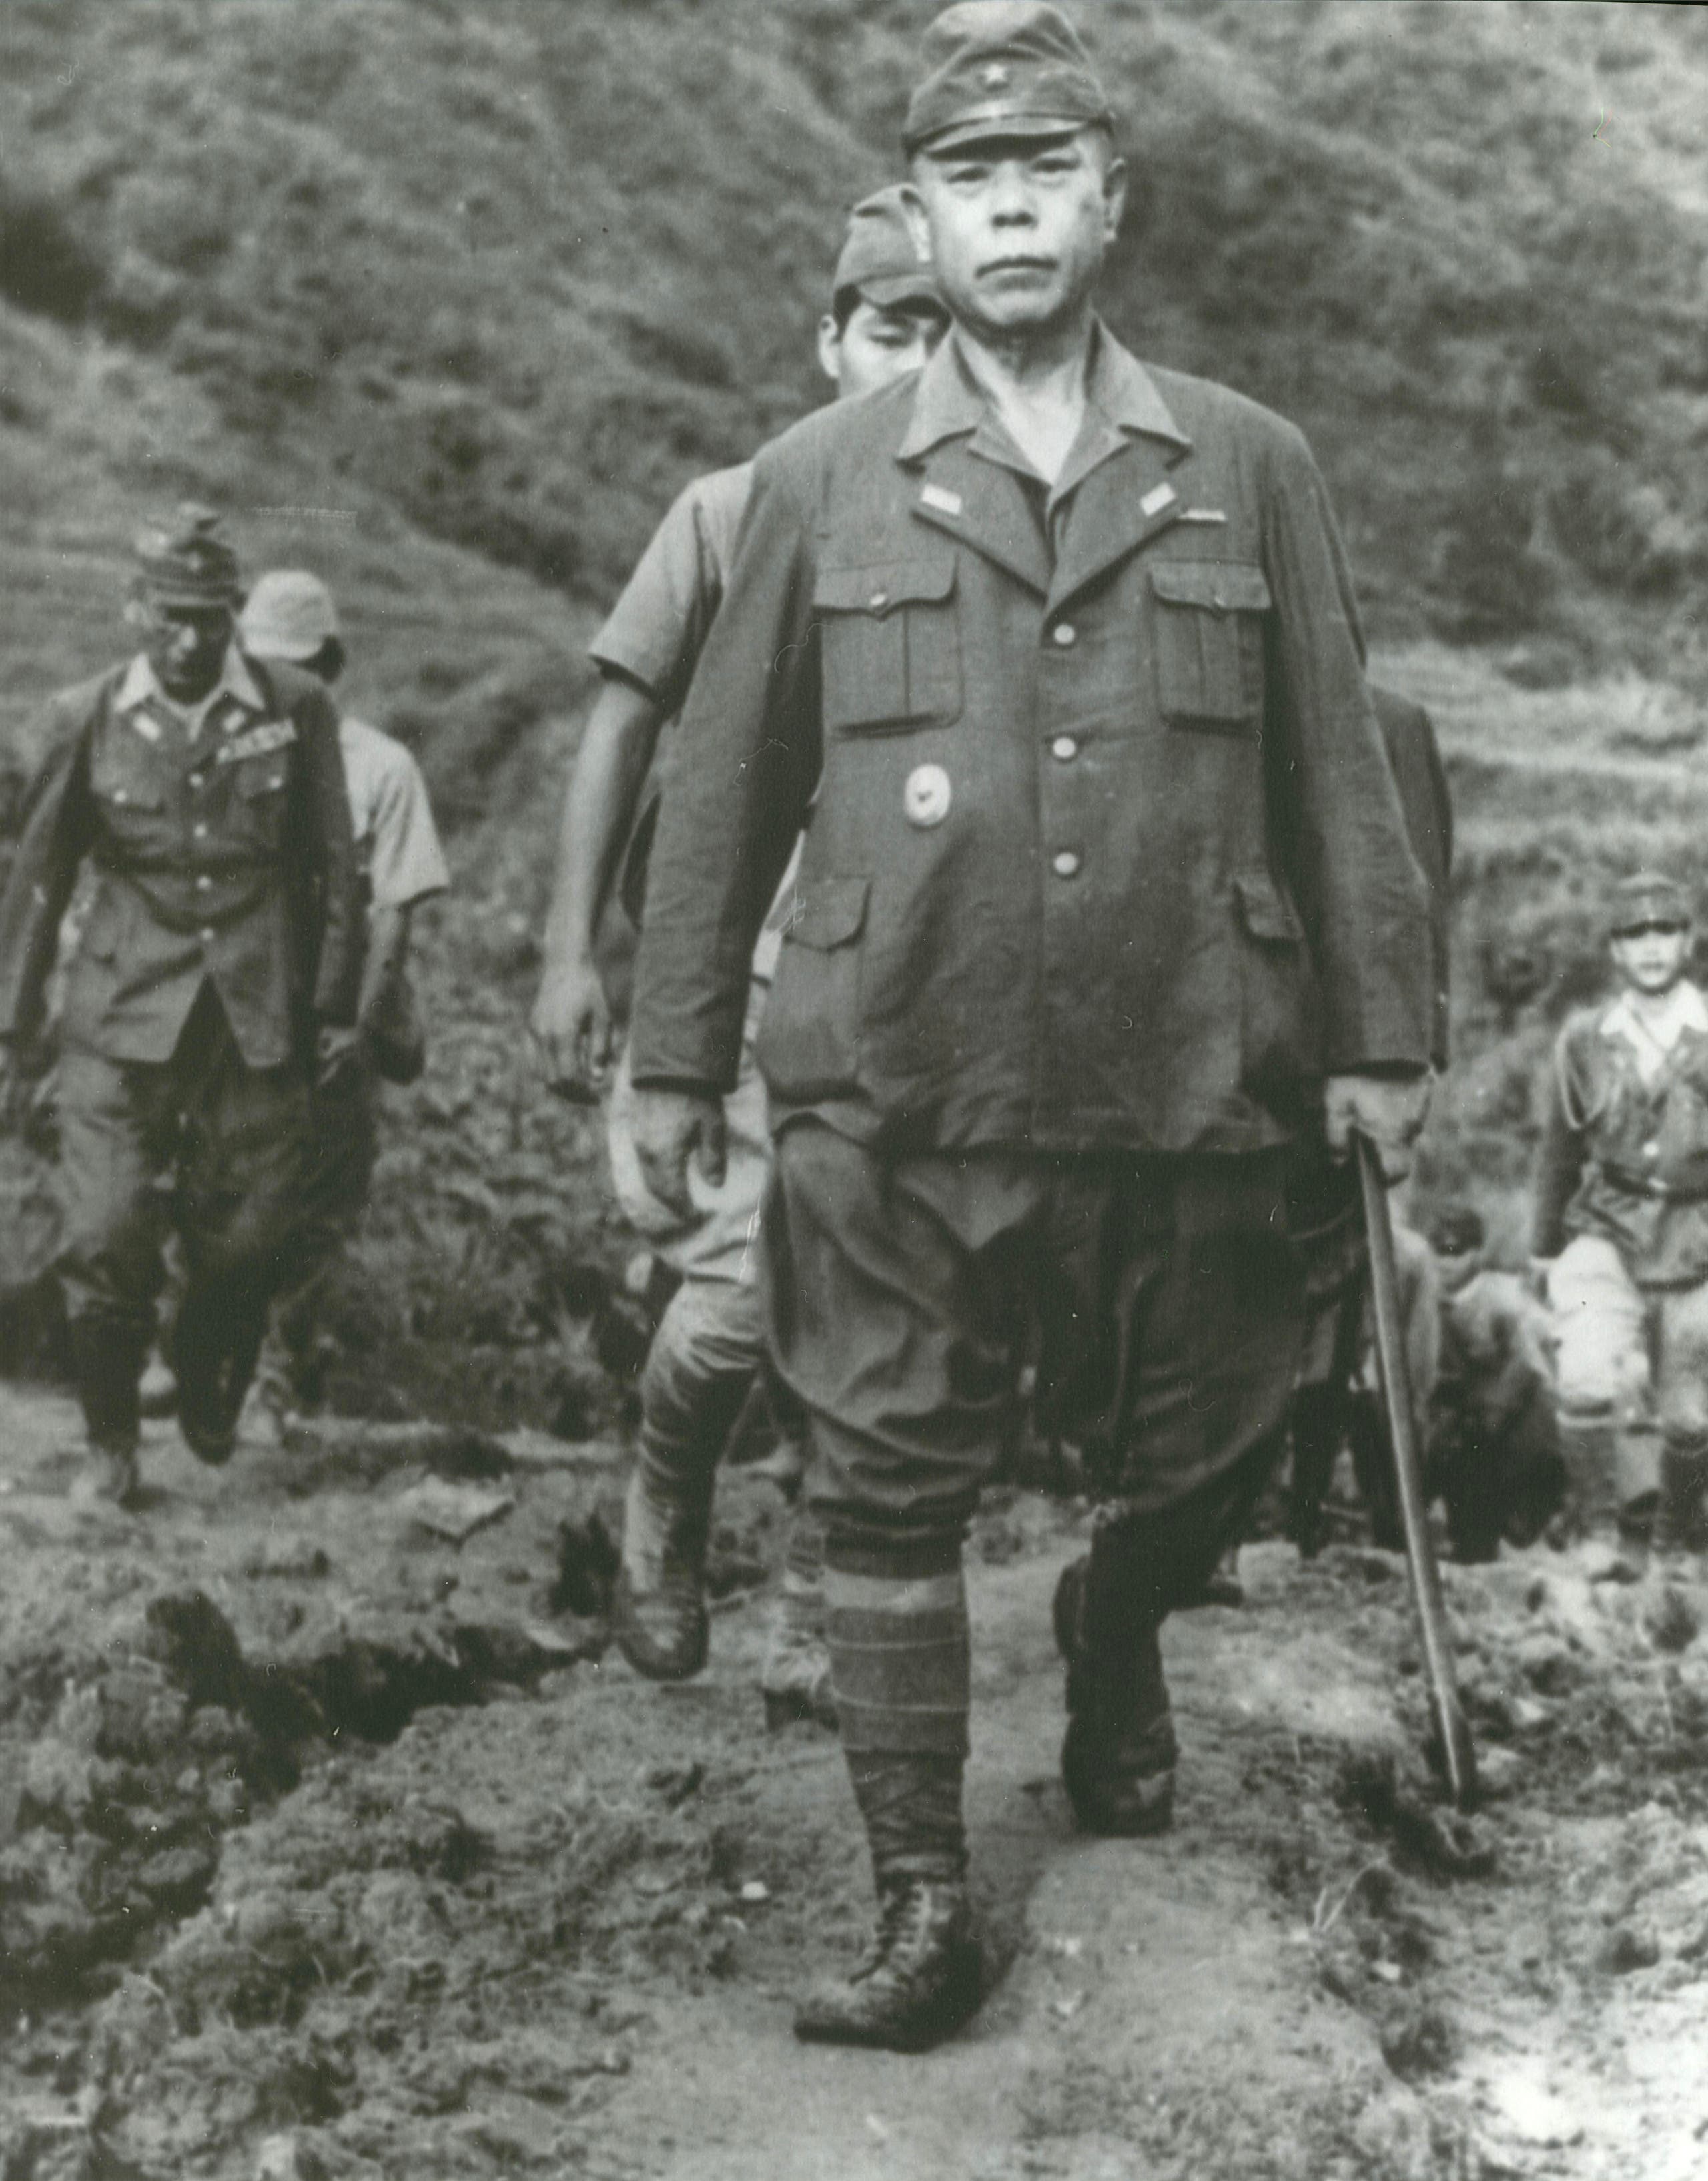 Image depicting the surrender of General Yamashita in 1945